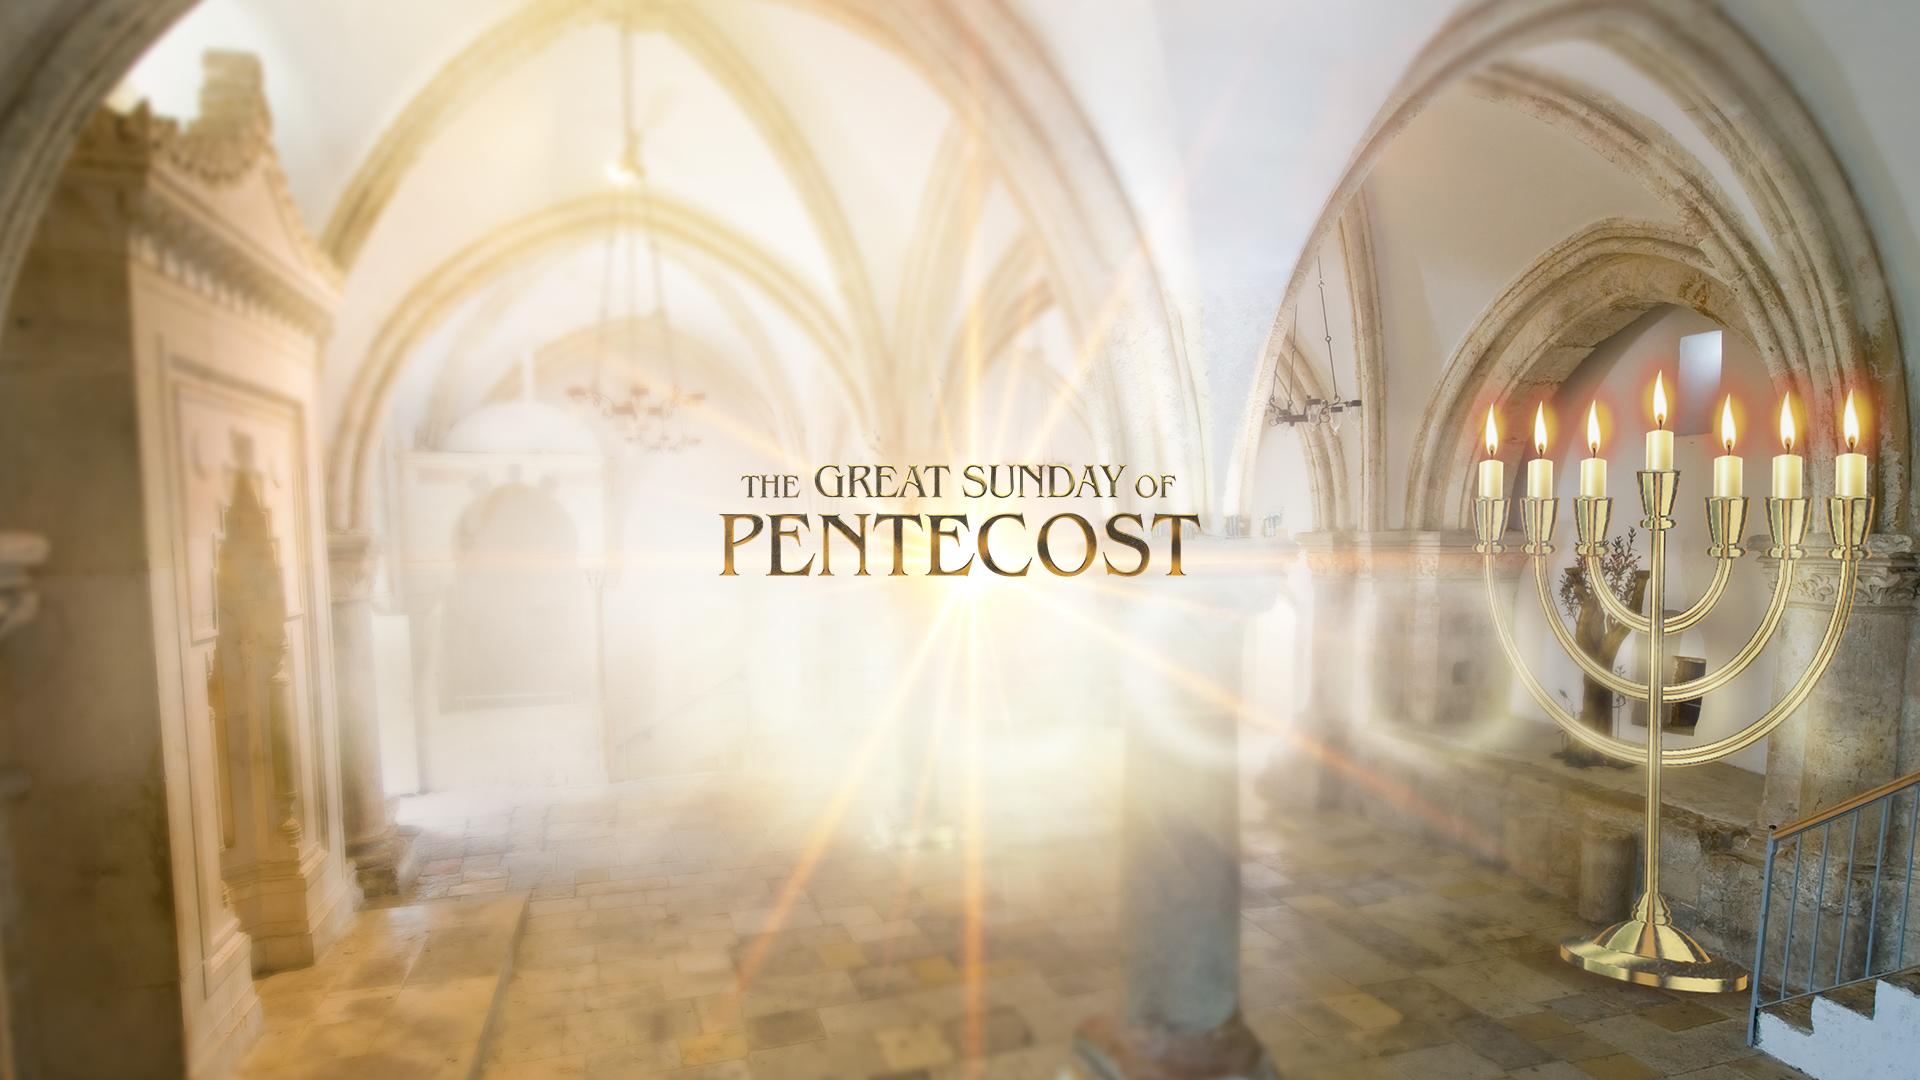 Pentecost webanner copy